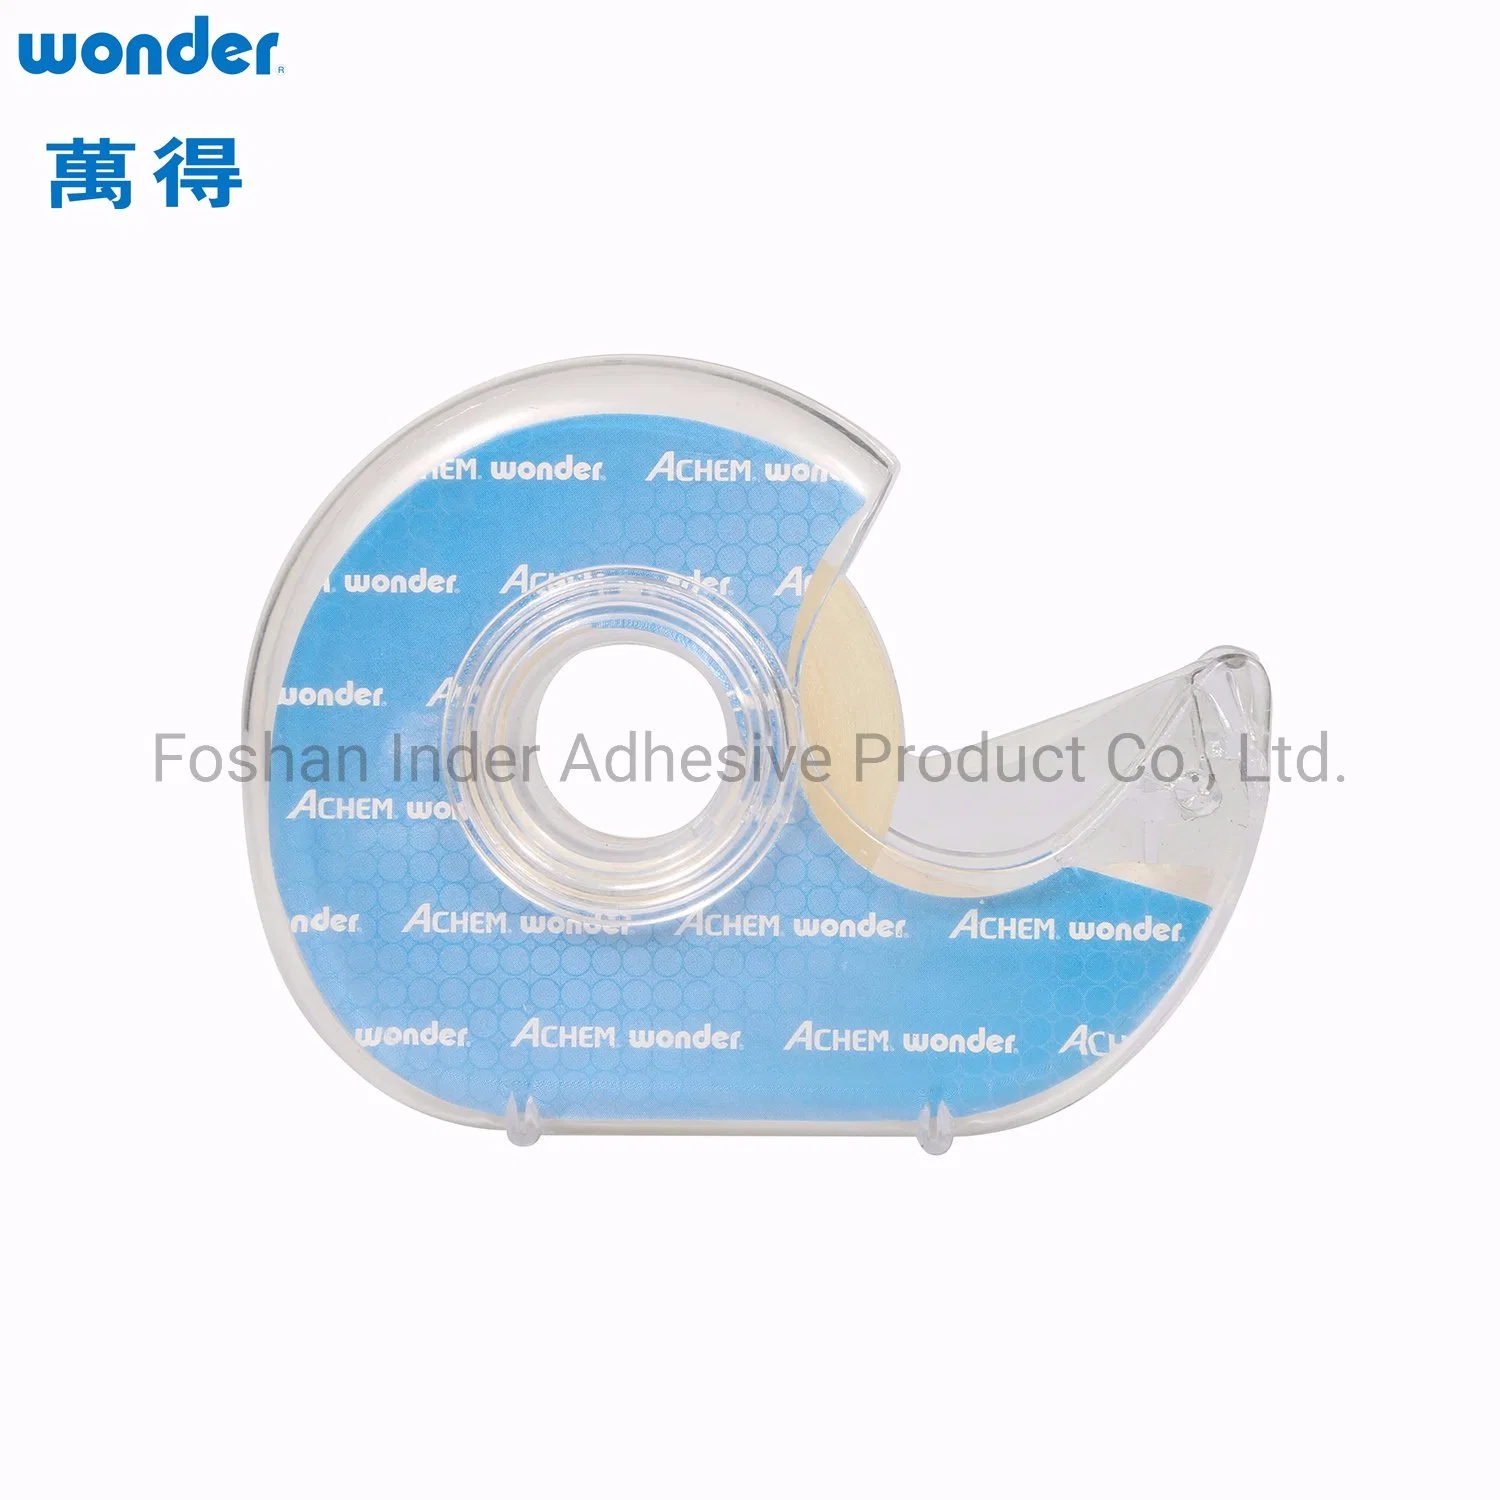 Wonder Brand High Quality Hot Saling Stationery Tape/BOPP Tape Dispenser/Cutter for Office